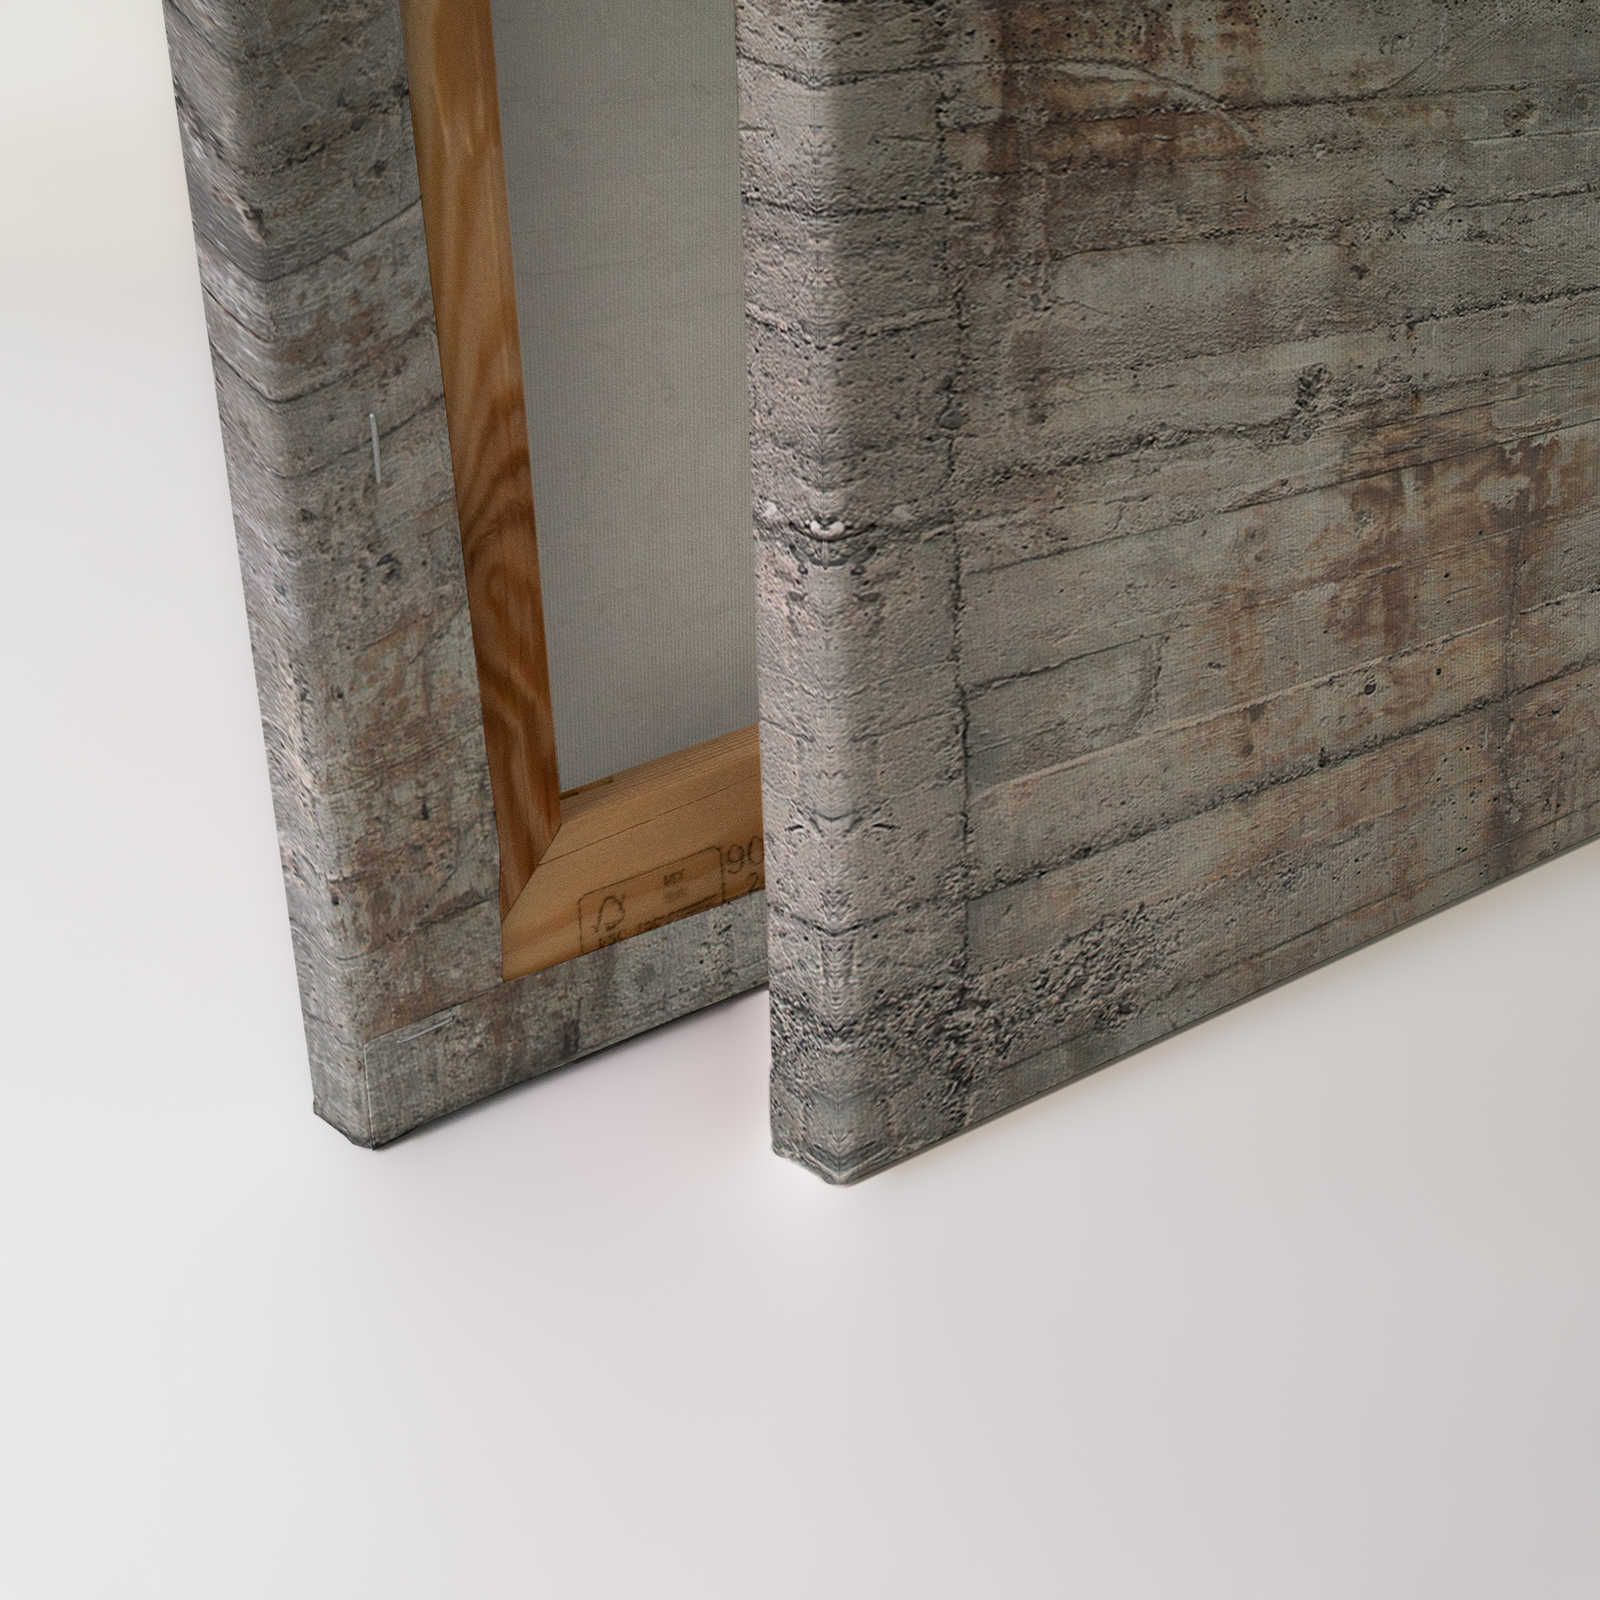             Lienzo concreto Pintura concreto armado rústico Gris Marrón - 0,90 m x 0,60 m
        